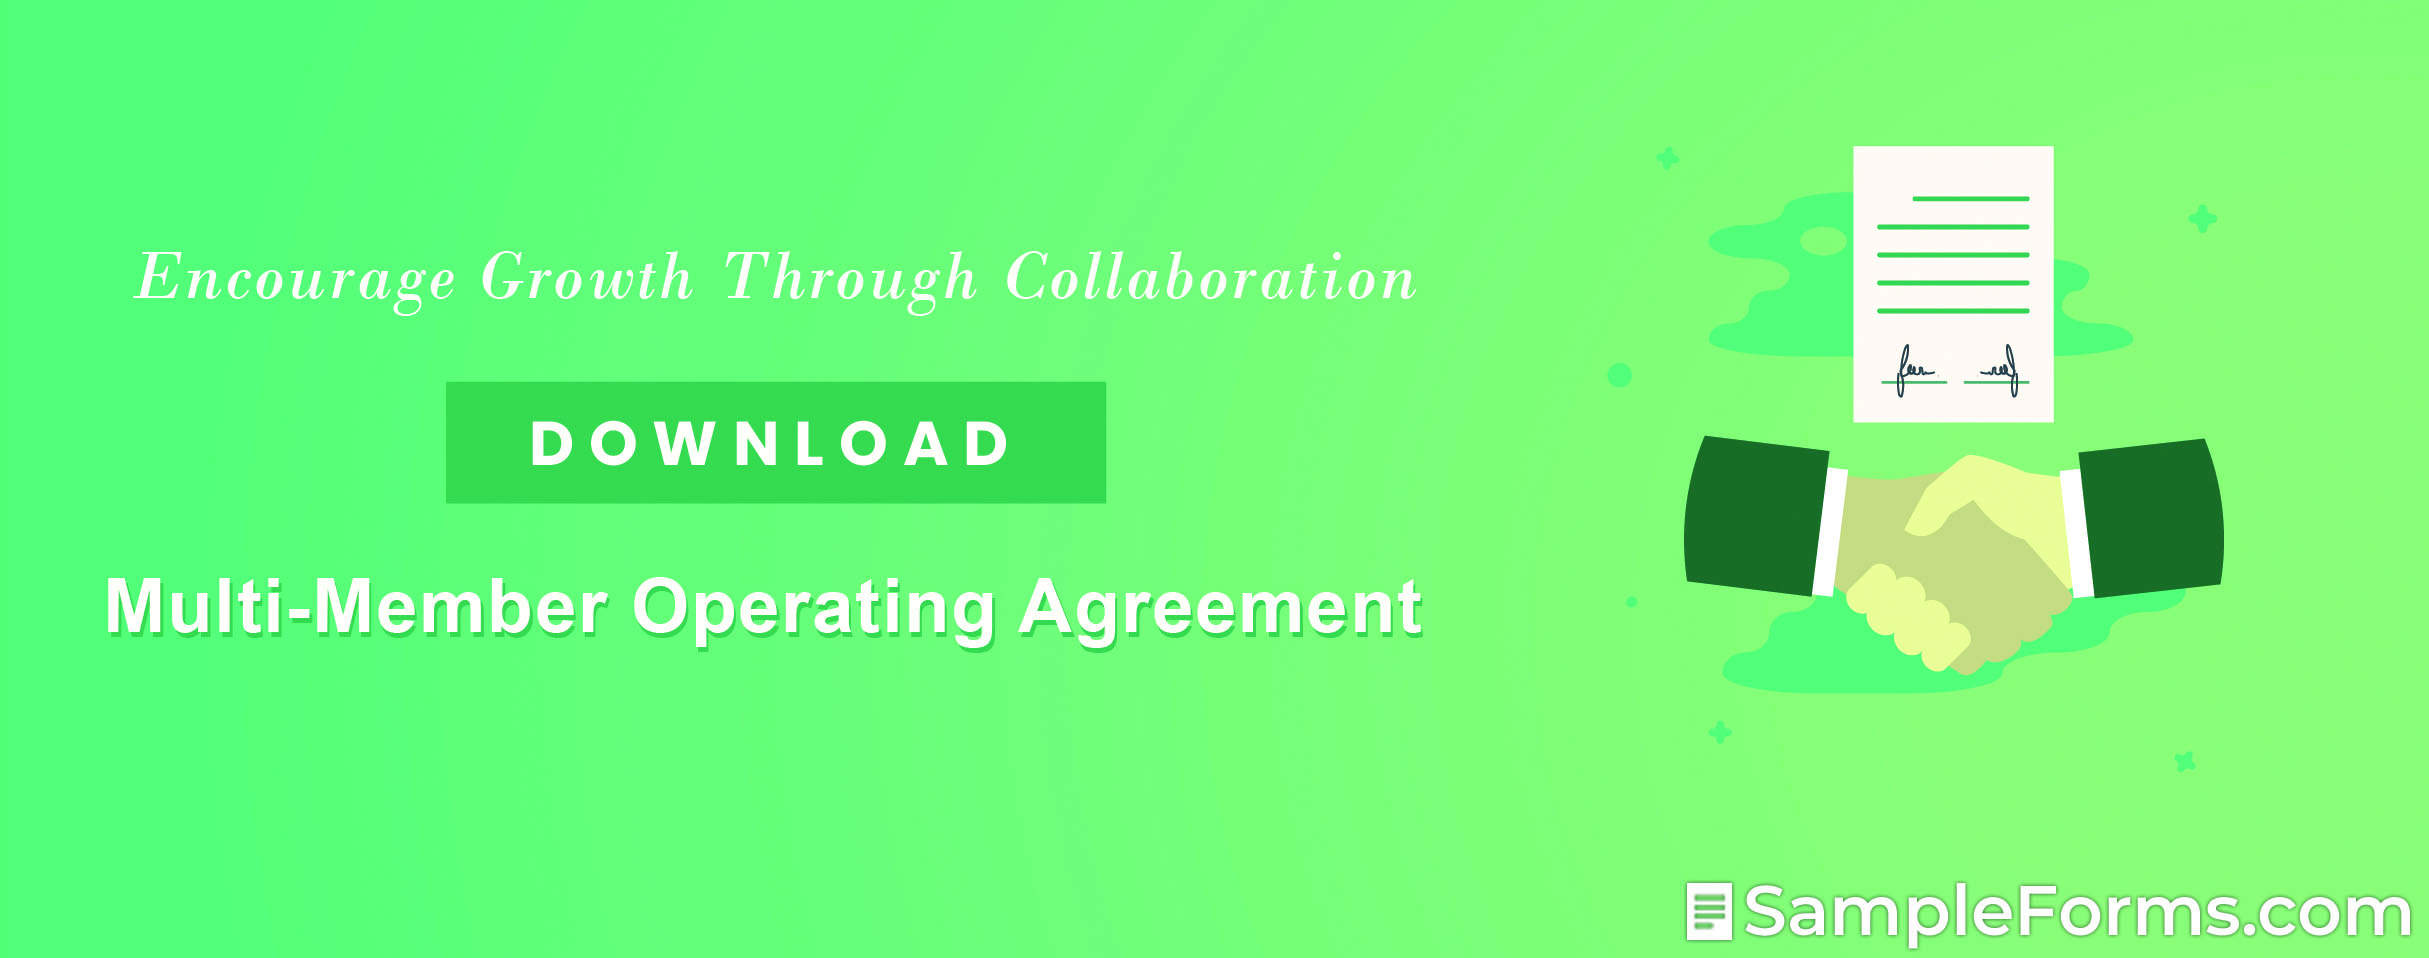 Multi Member Operating Agreement1